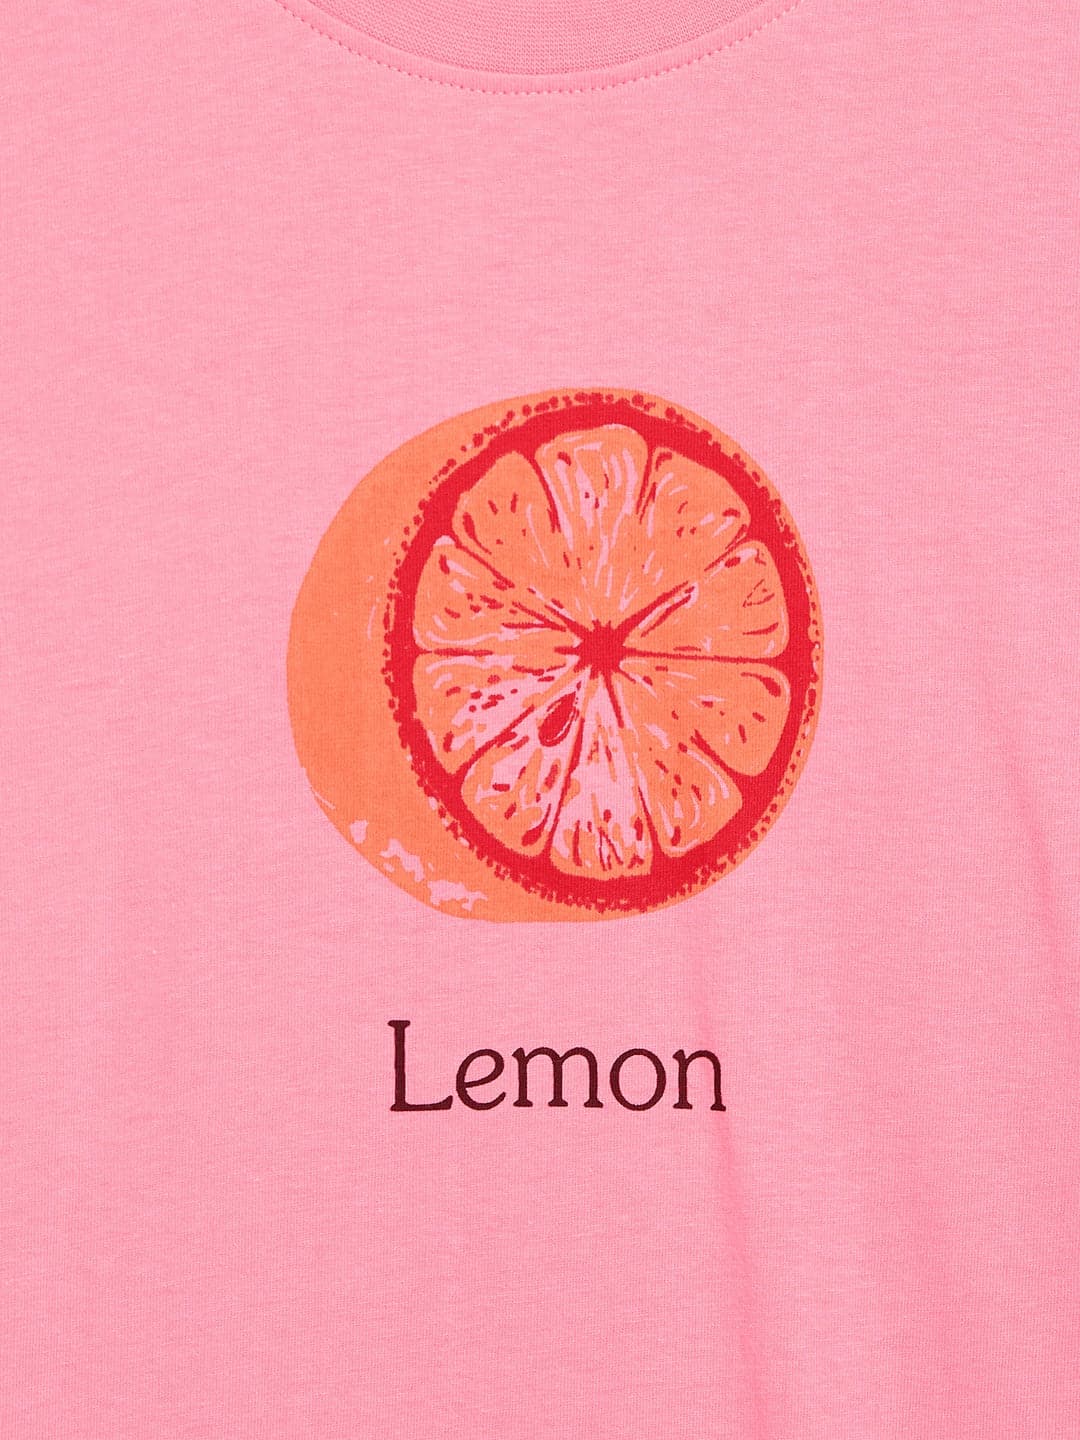 Girls Pink Lemon Print T-Shirt Dress - Lyush Kids